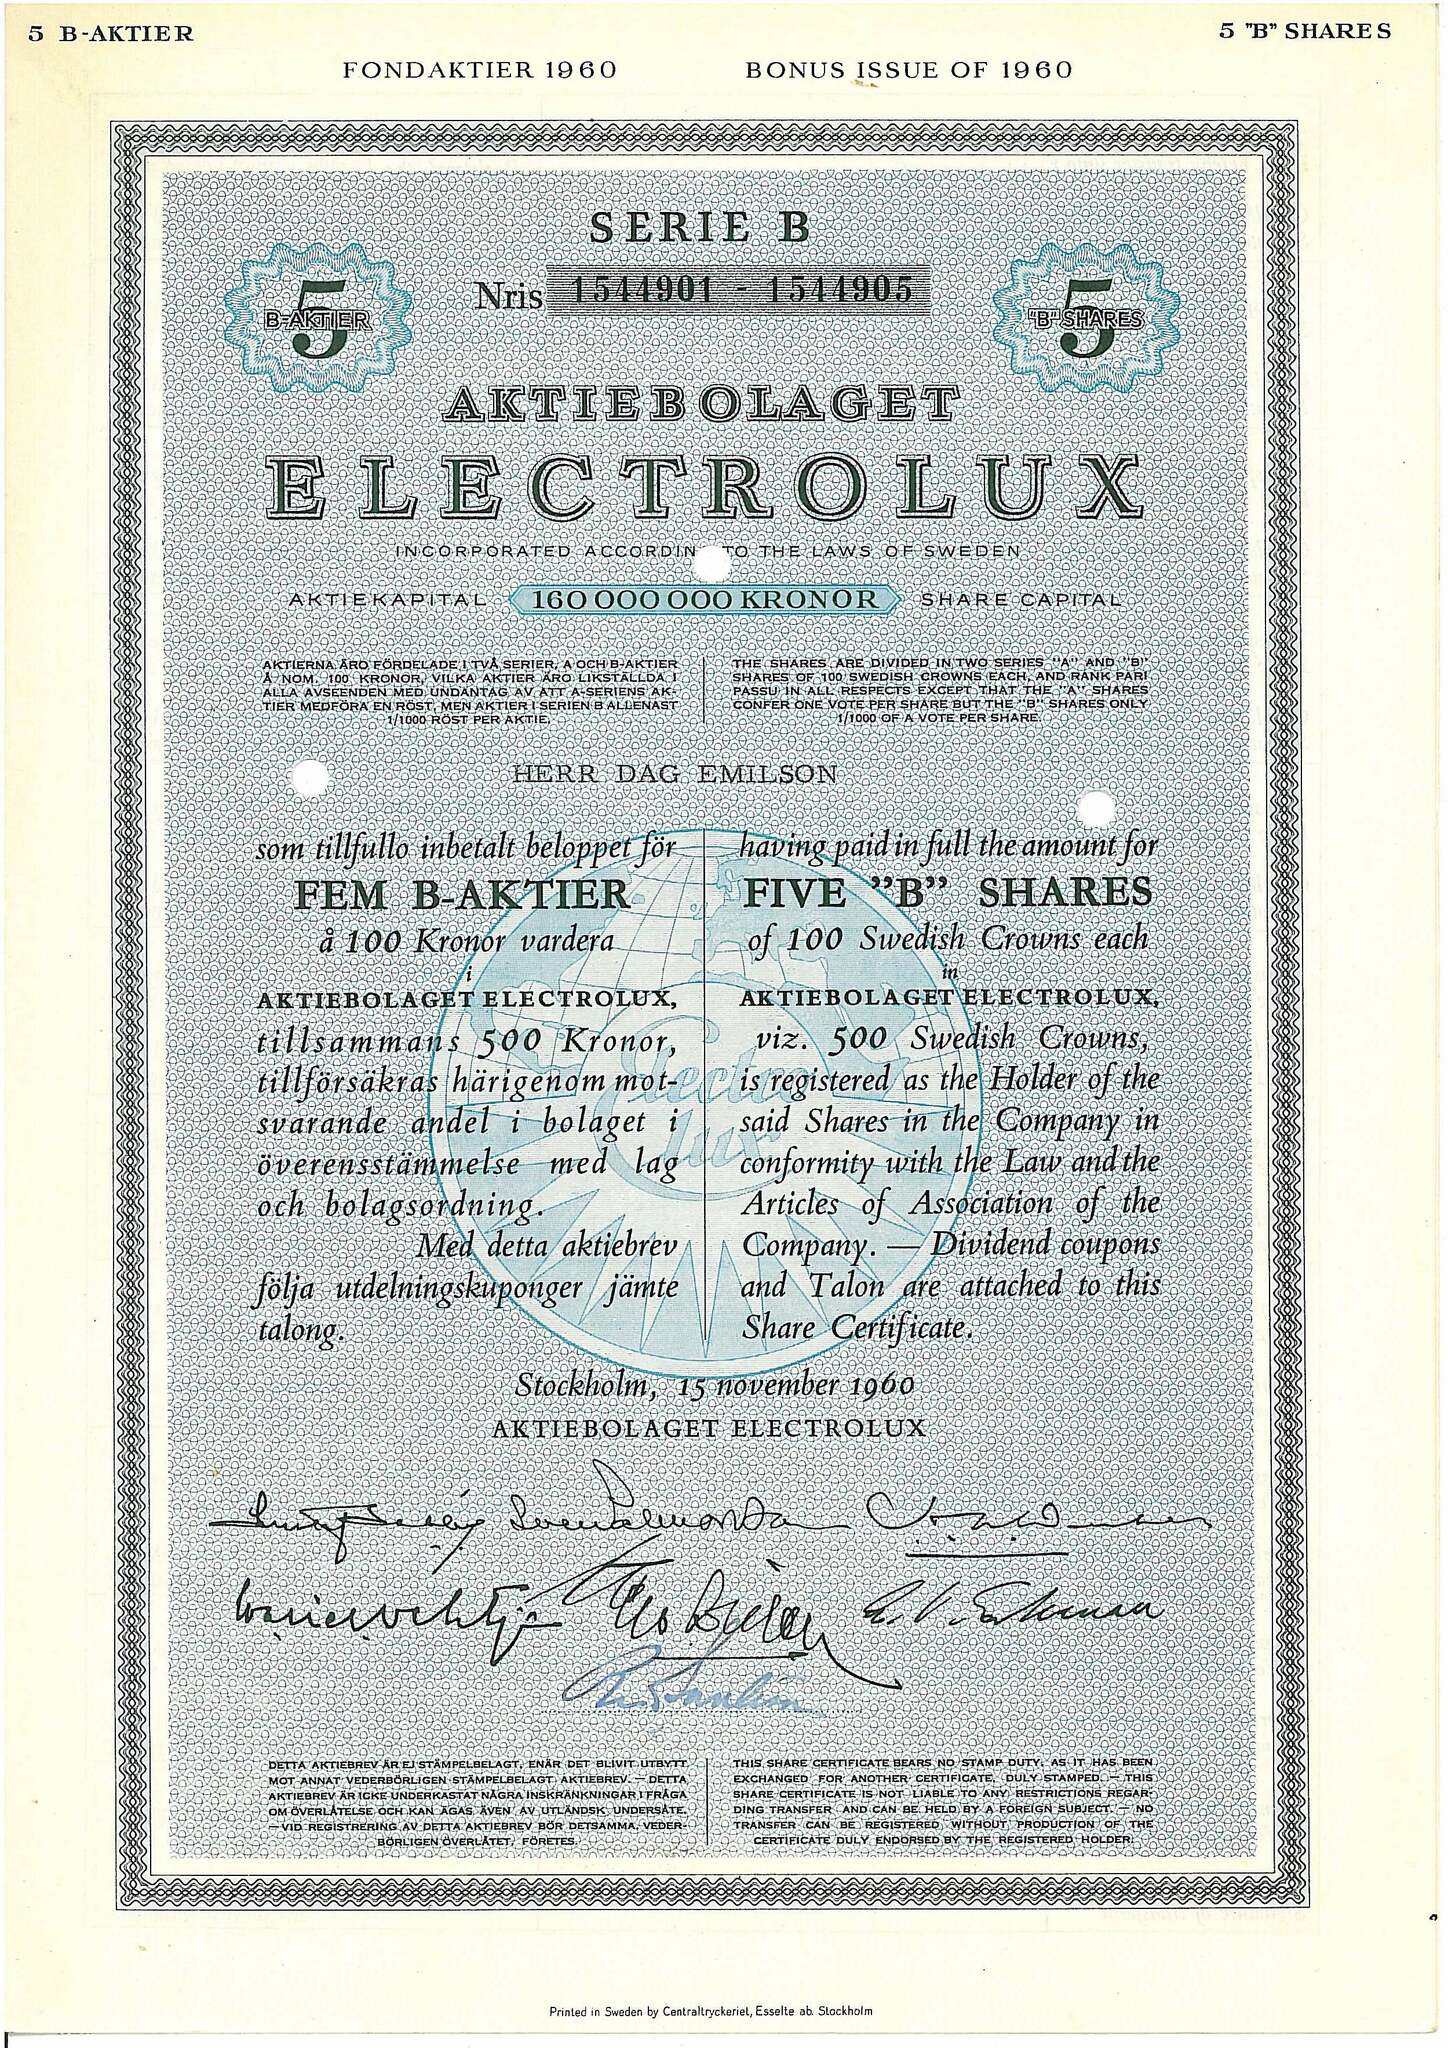 Electrolux, AB, 1960